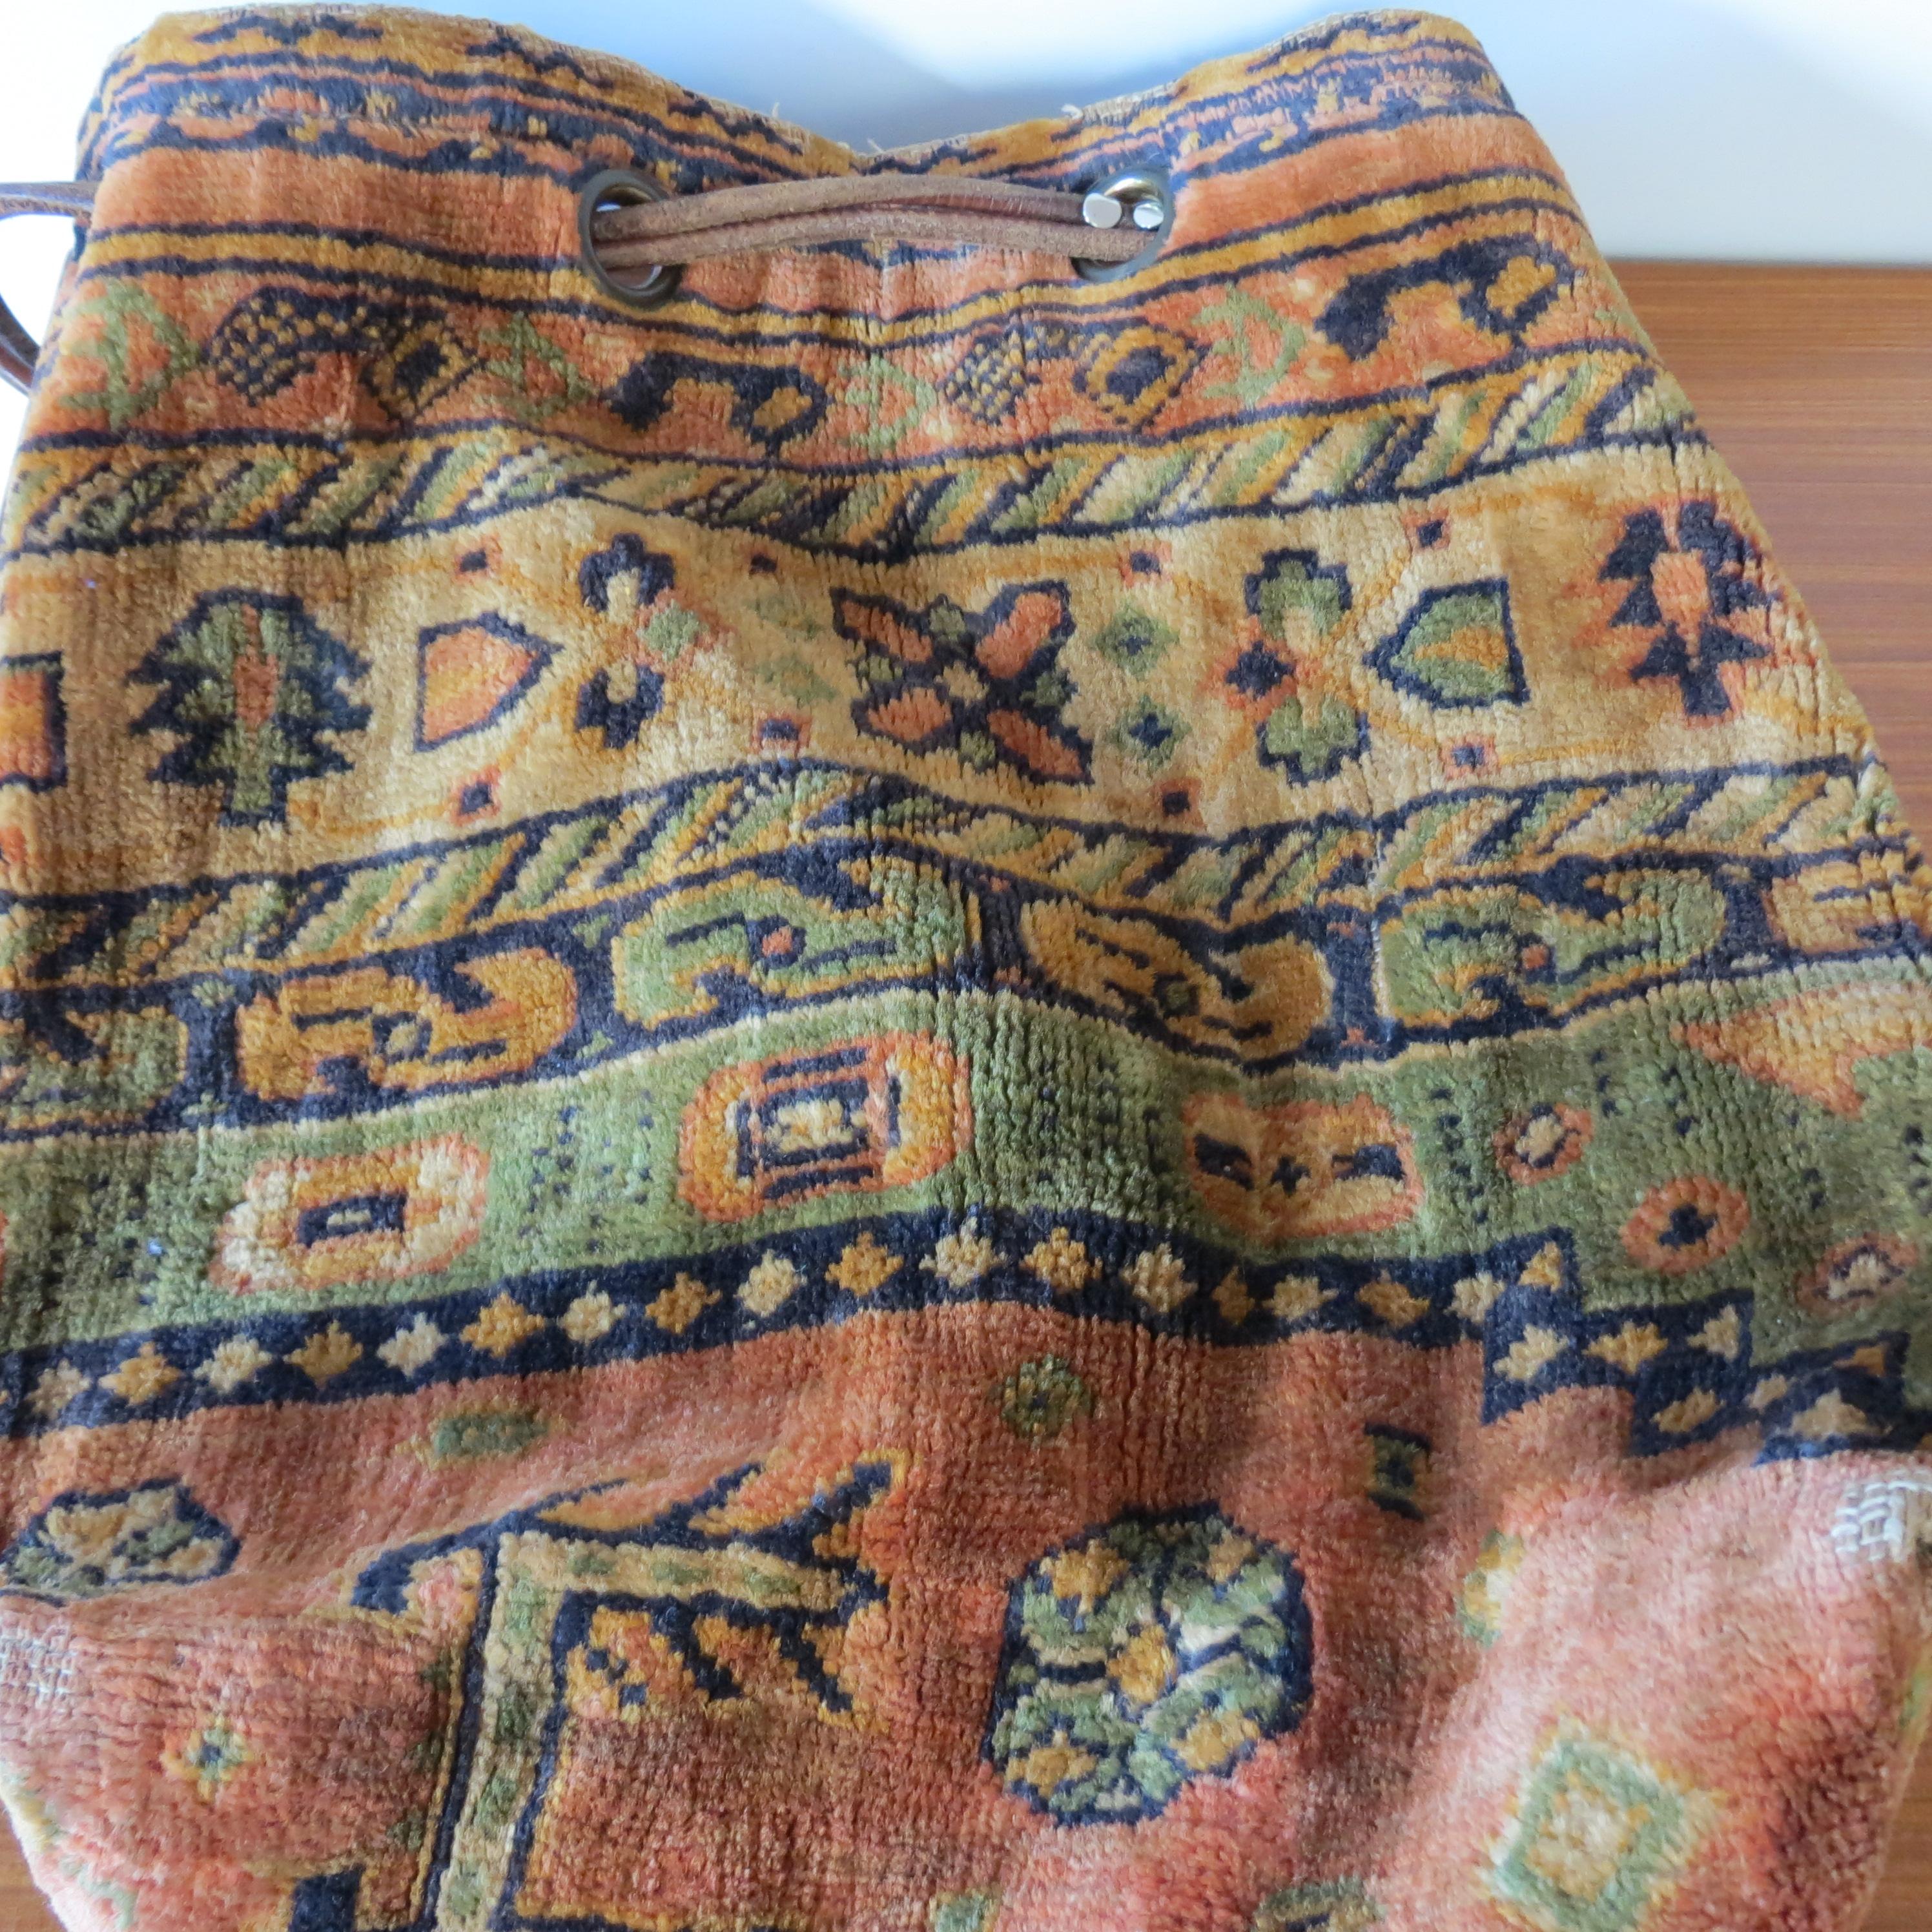 Hand-Crafted Original 1970s Vintage Carpet Bag Tapestry Bag by the Carpet Bag Company